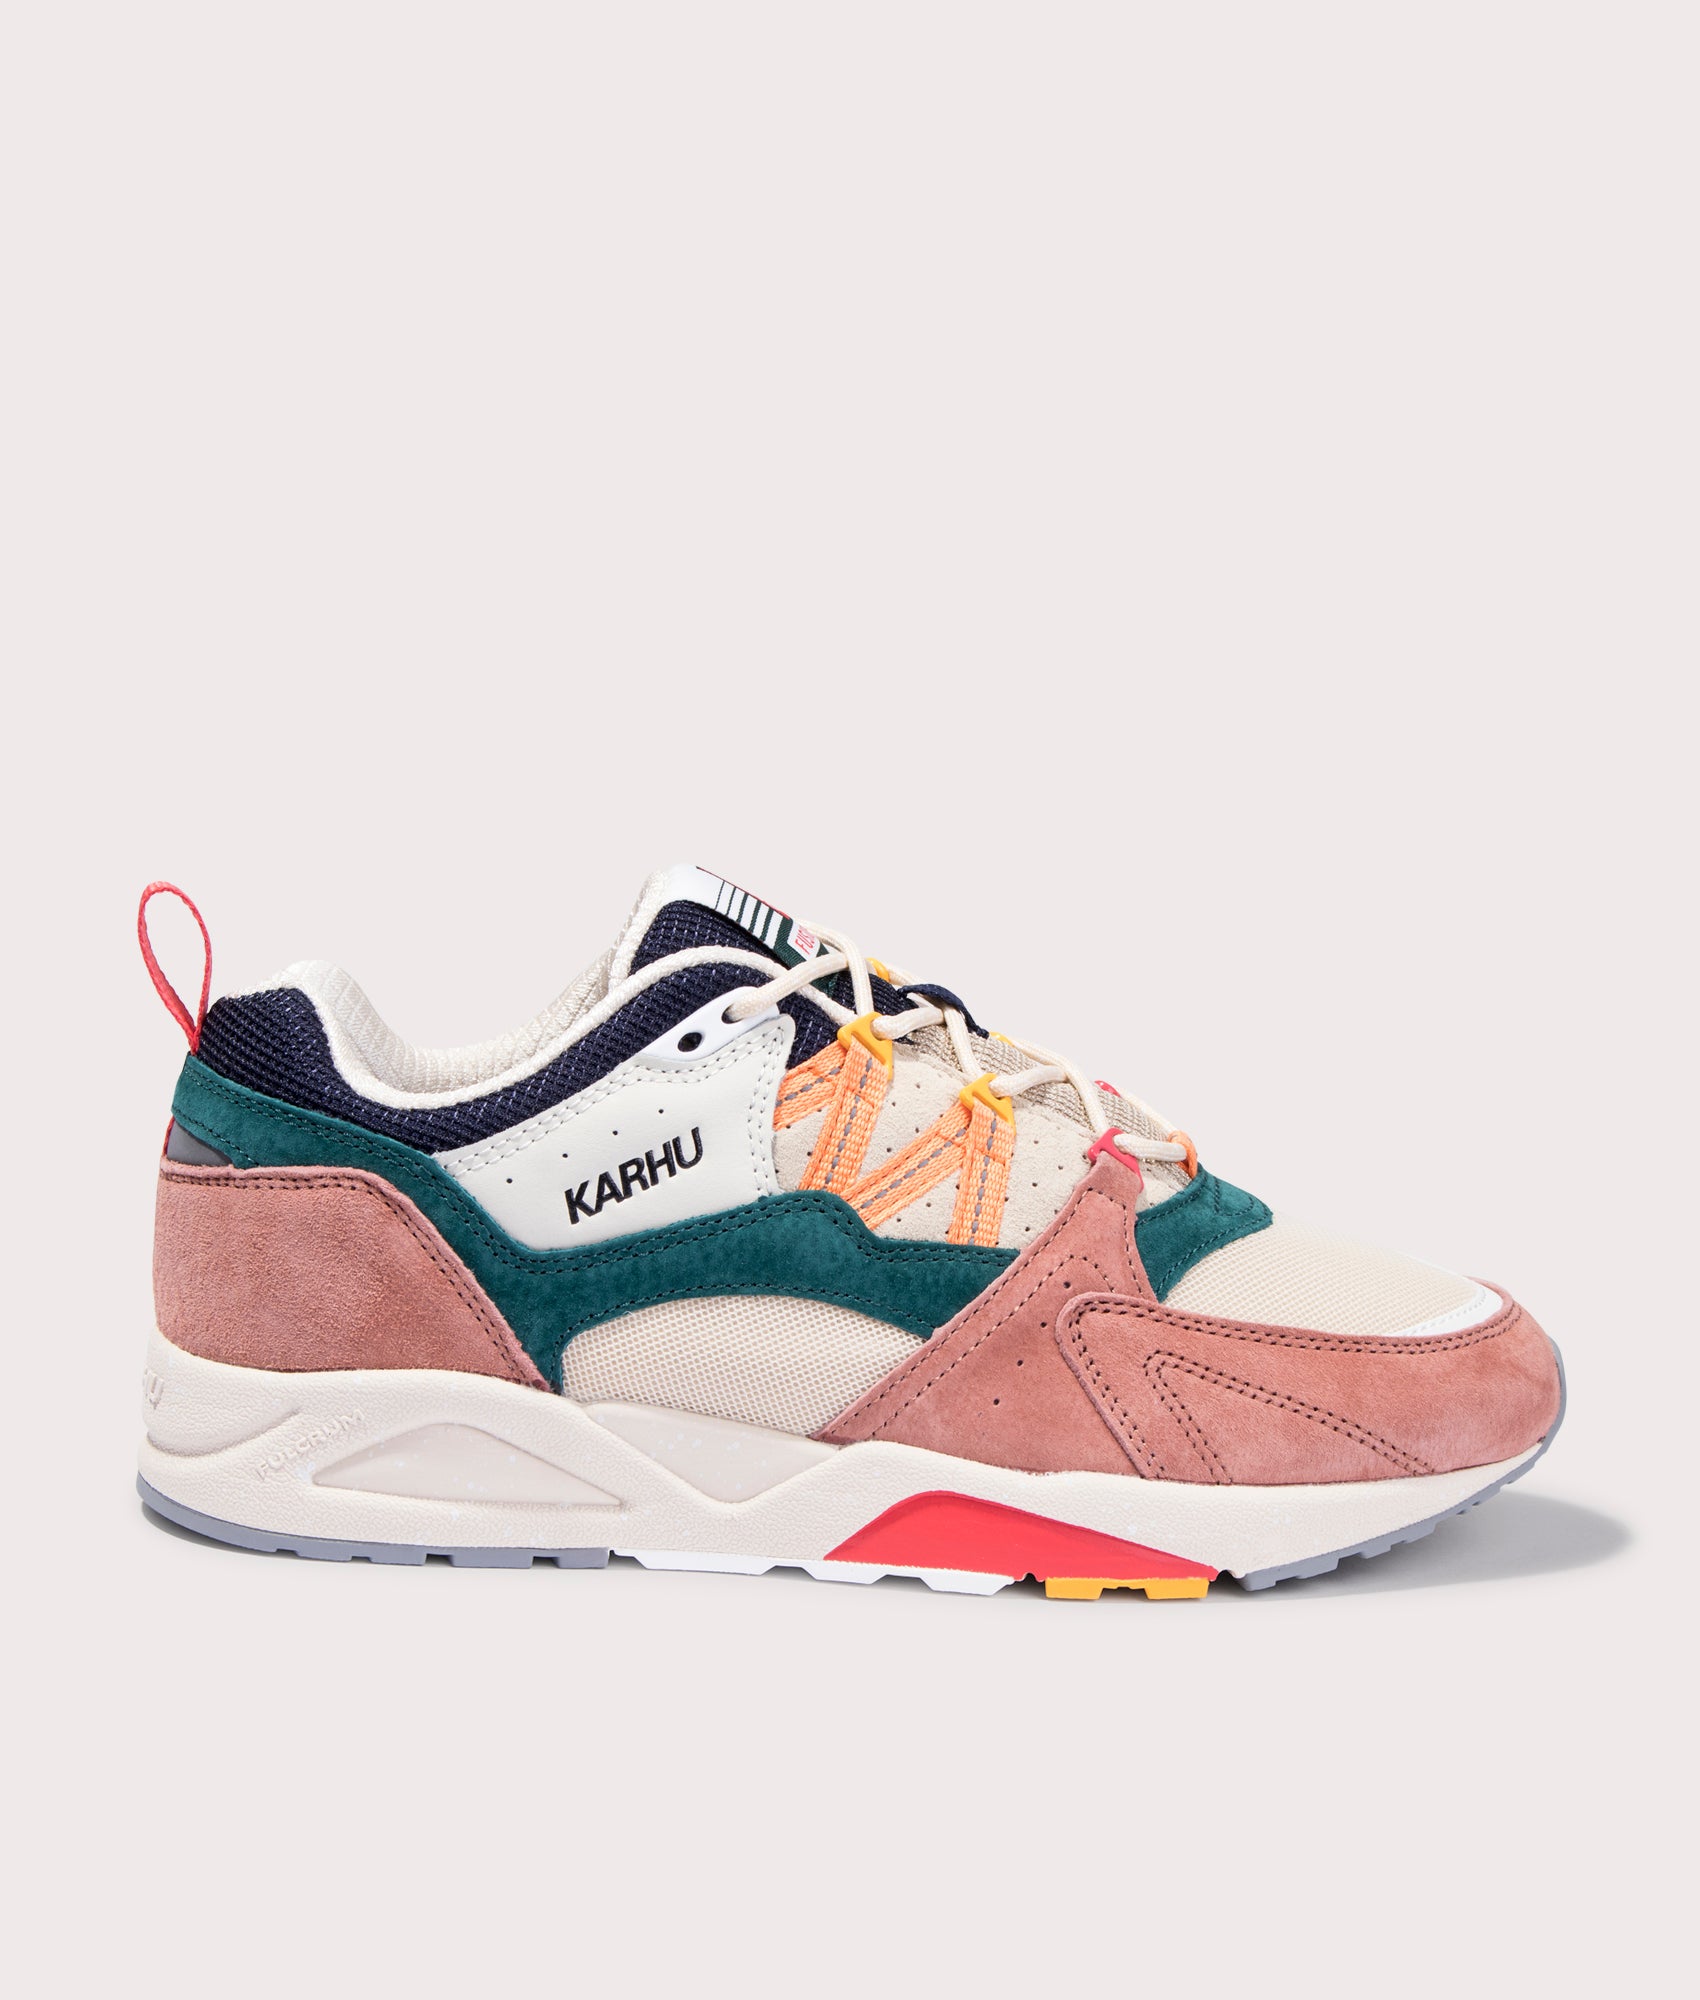 Karhu Mens Fusion 2.0 Sneakers - Colour: Cork/Tangerine - Size: 11